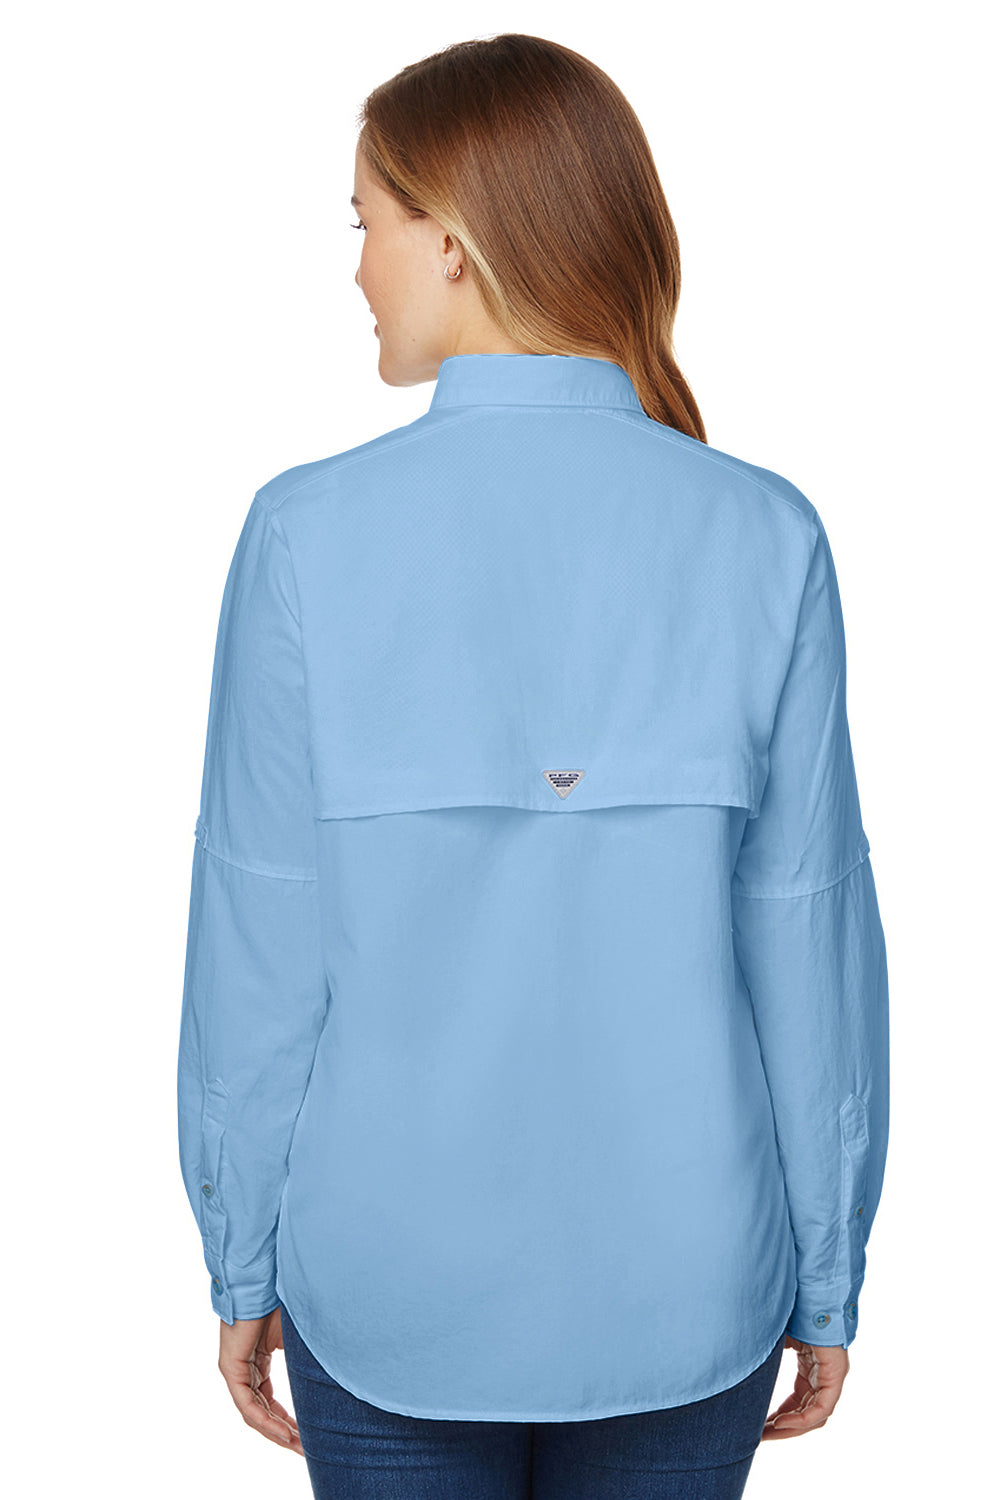 Columbia 7314 Womens Bahama Moisture Wicking Long Sleeve Button Down Shirt w/ Double Pockets White Cap Blue Back